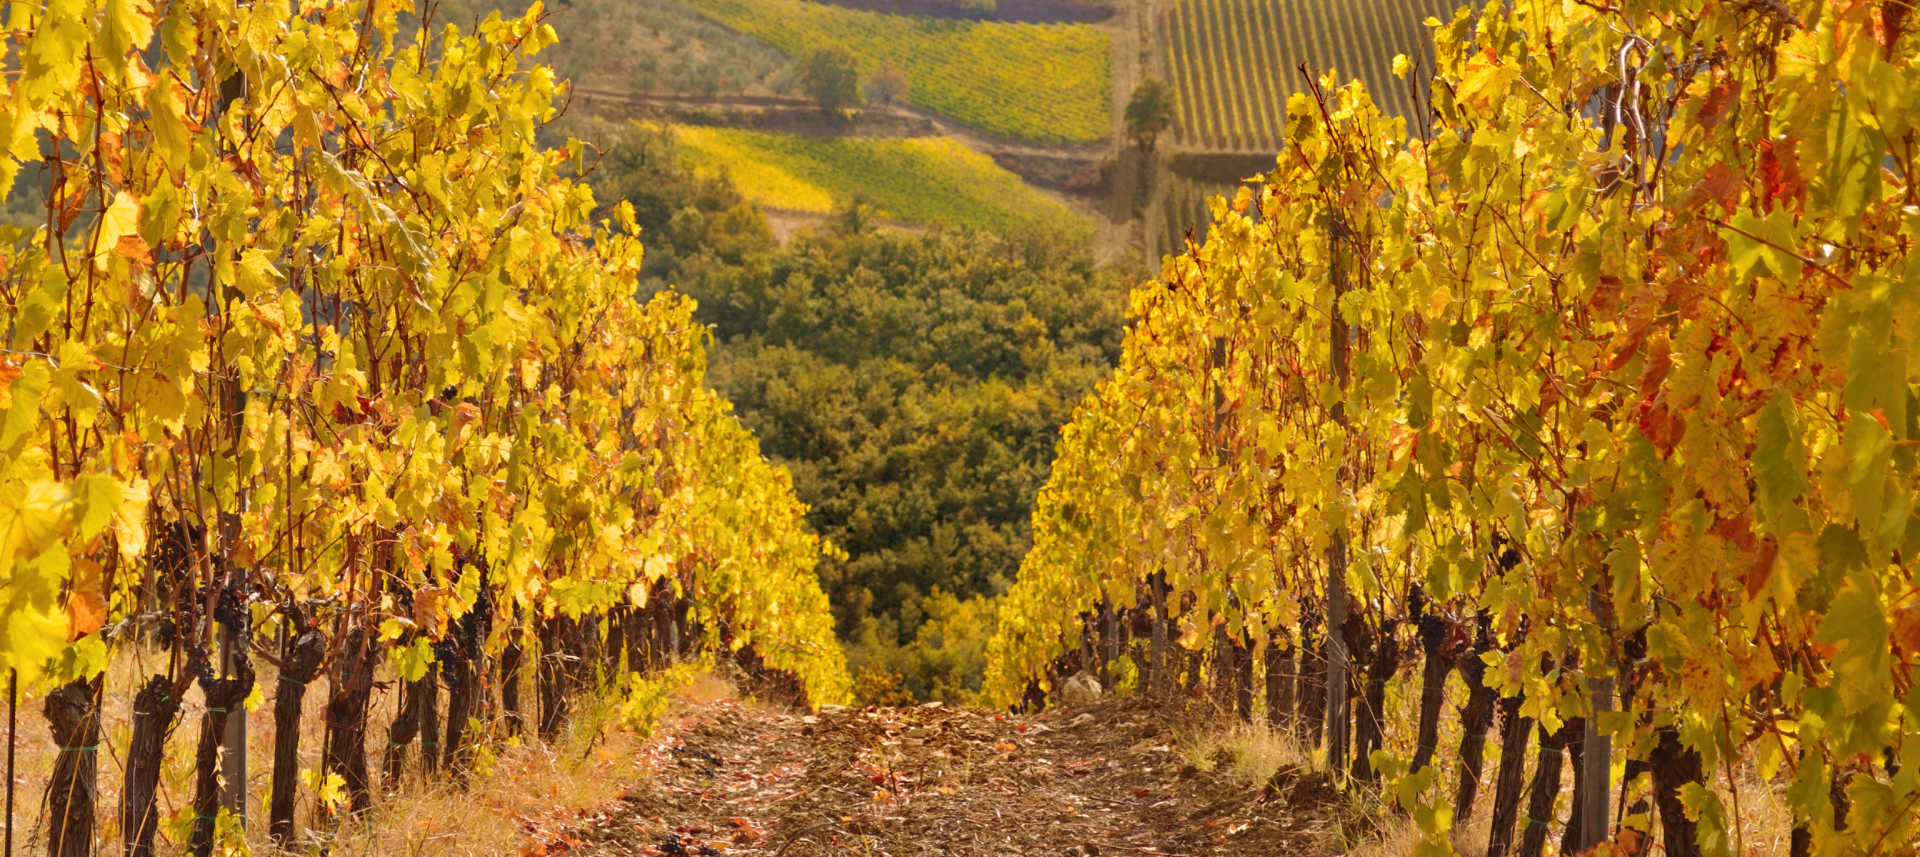 winery-generic-8 lilbert - vineyard.jpg